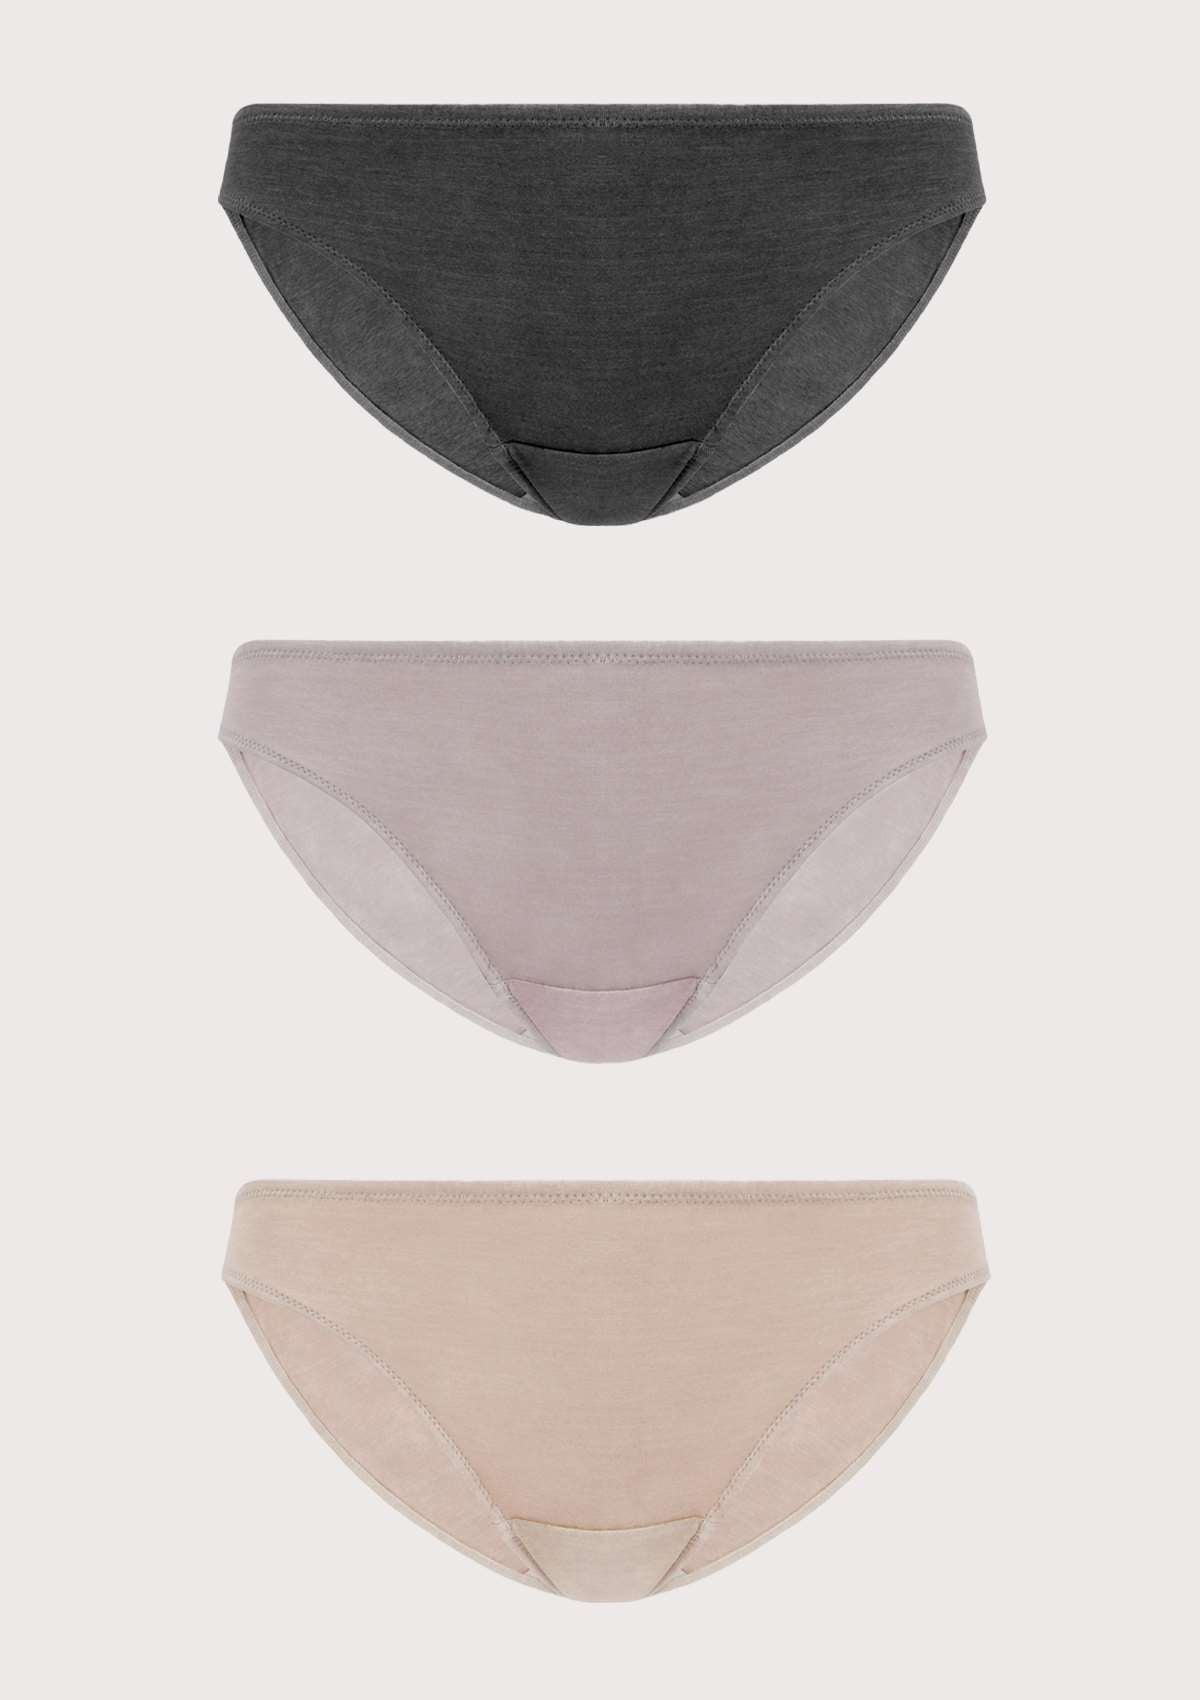 HSIA Comfort Cotton Mid-rise Bikini Panties 3 Pack - L / Black+Pink+Beige